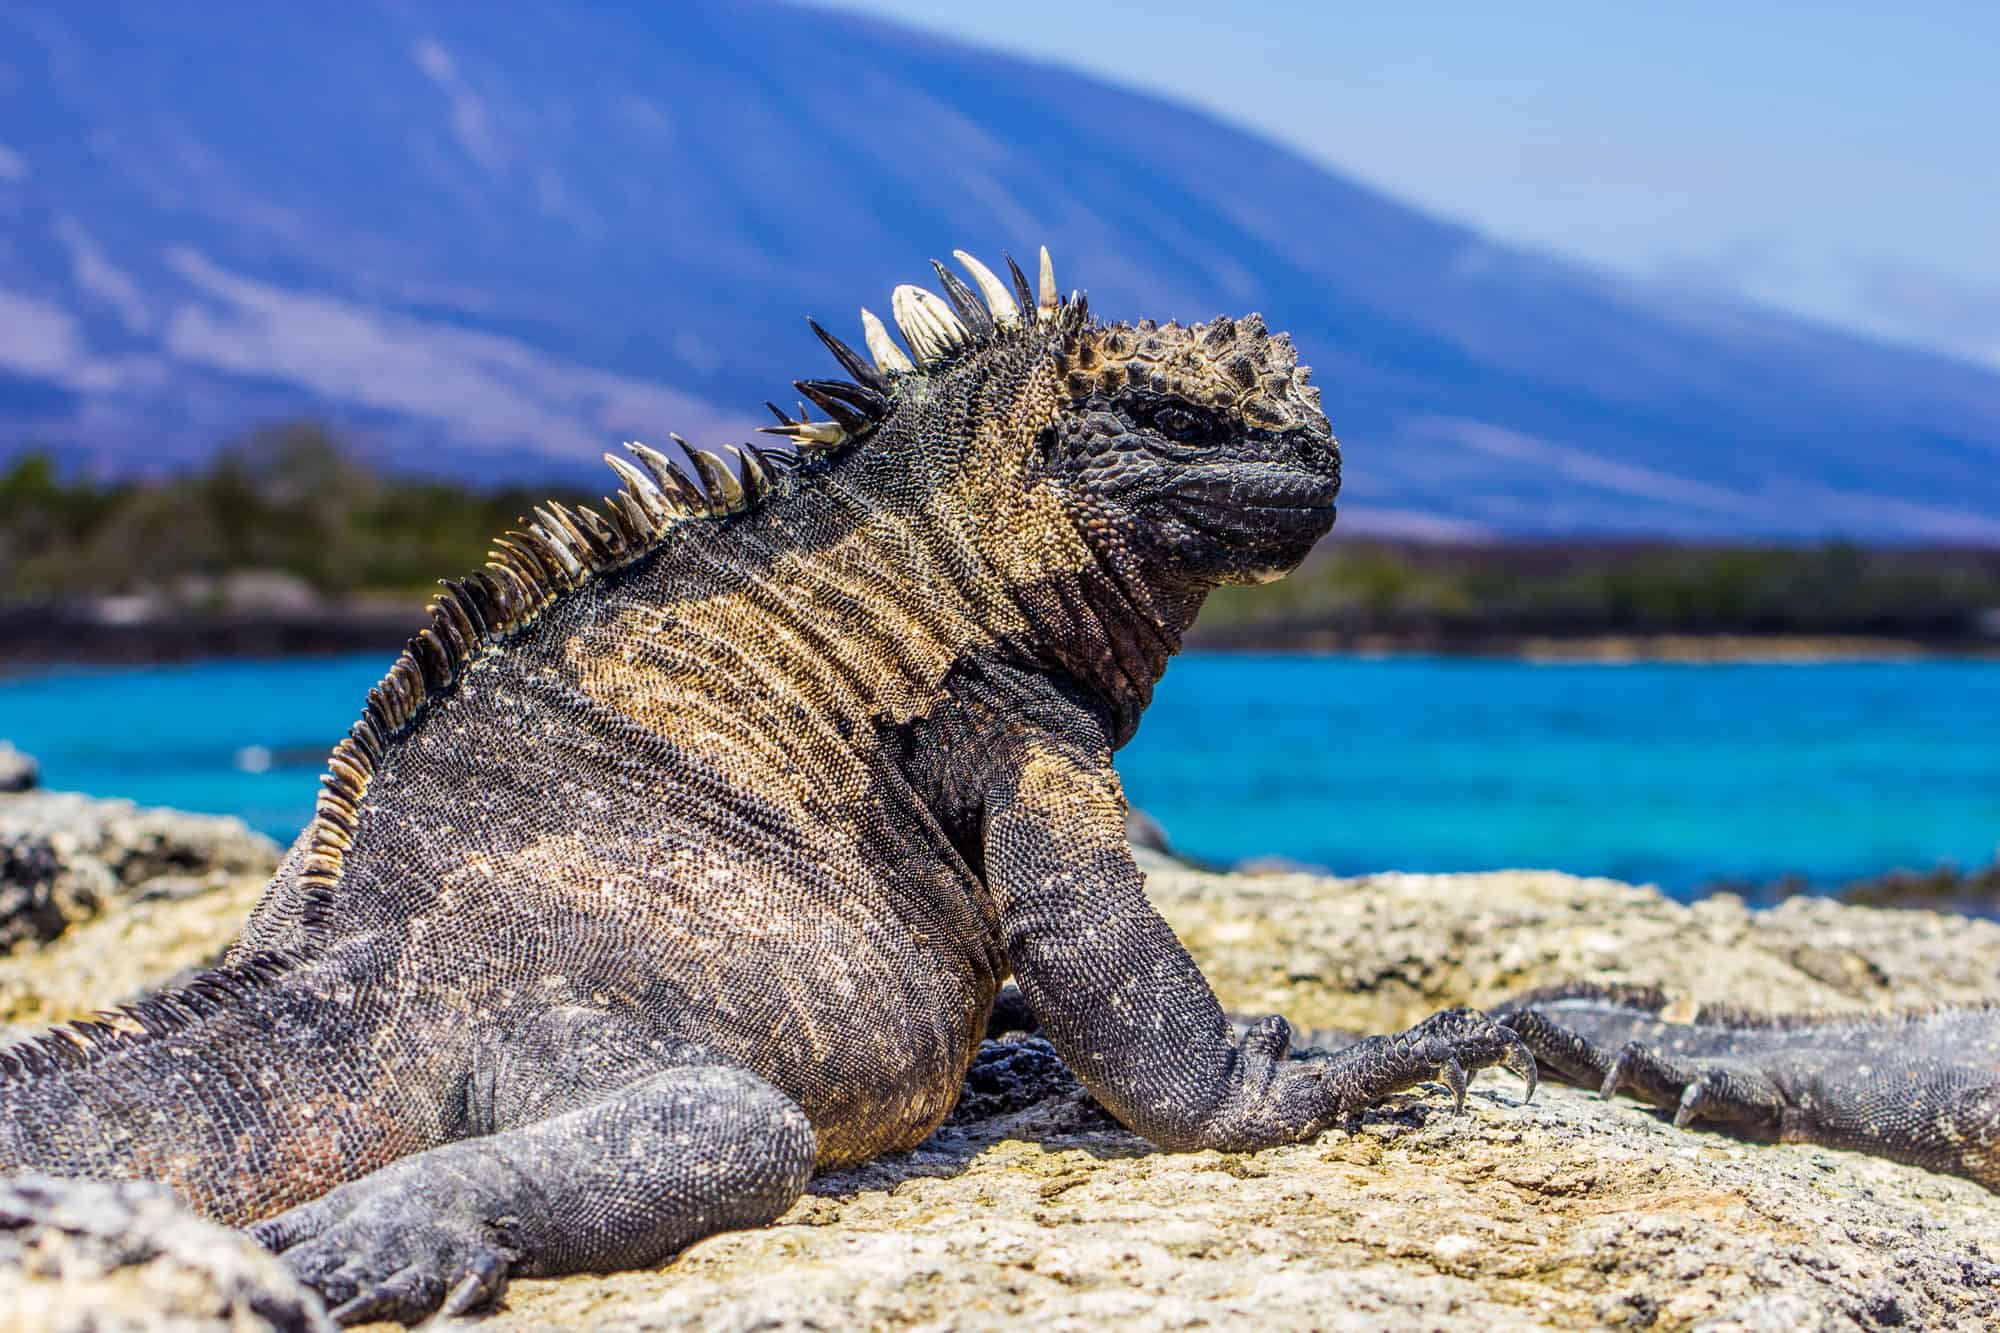 Marine iguana, Amblyrhyncus cristatus in Galapagos islands